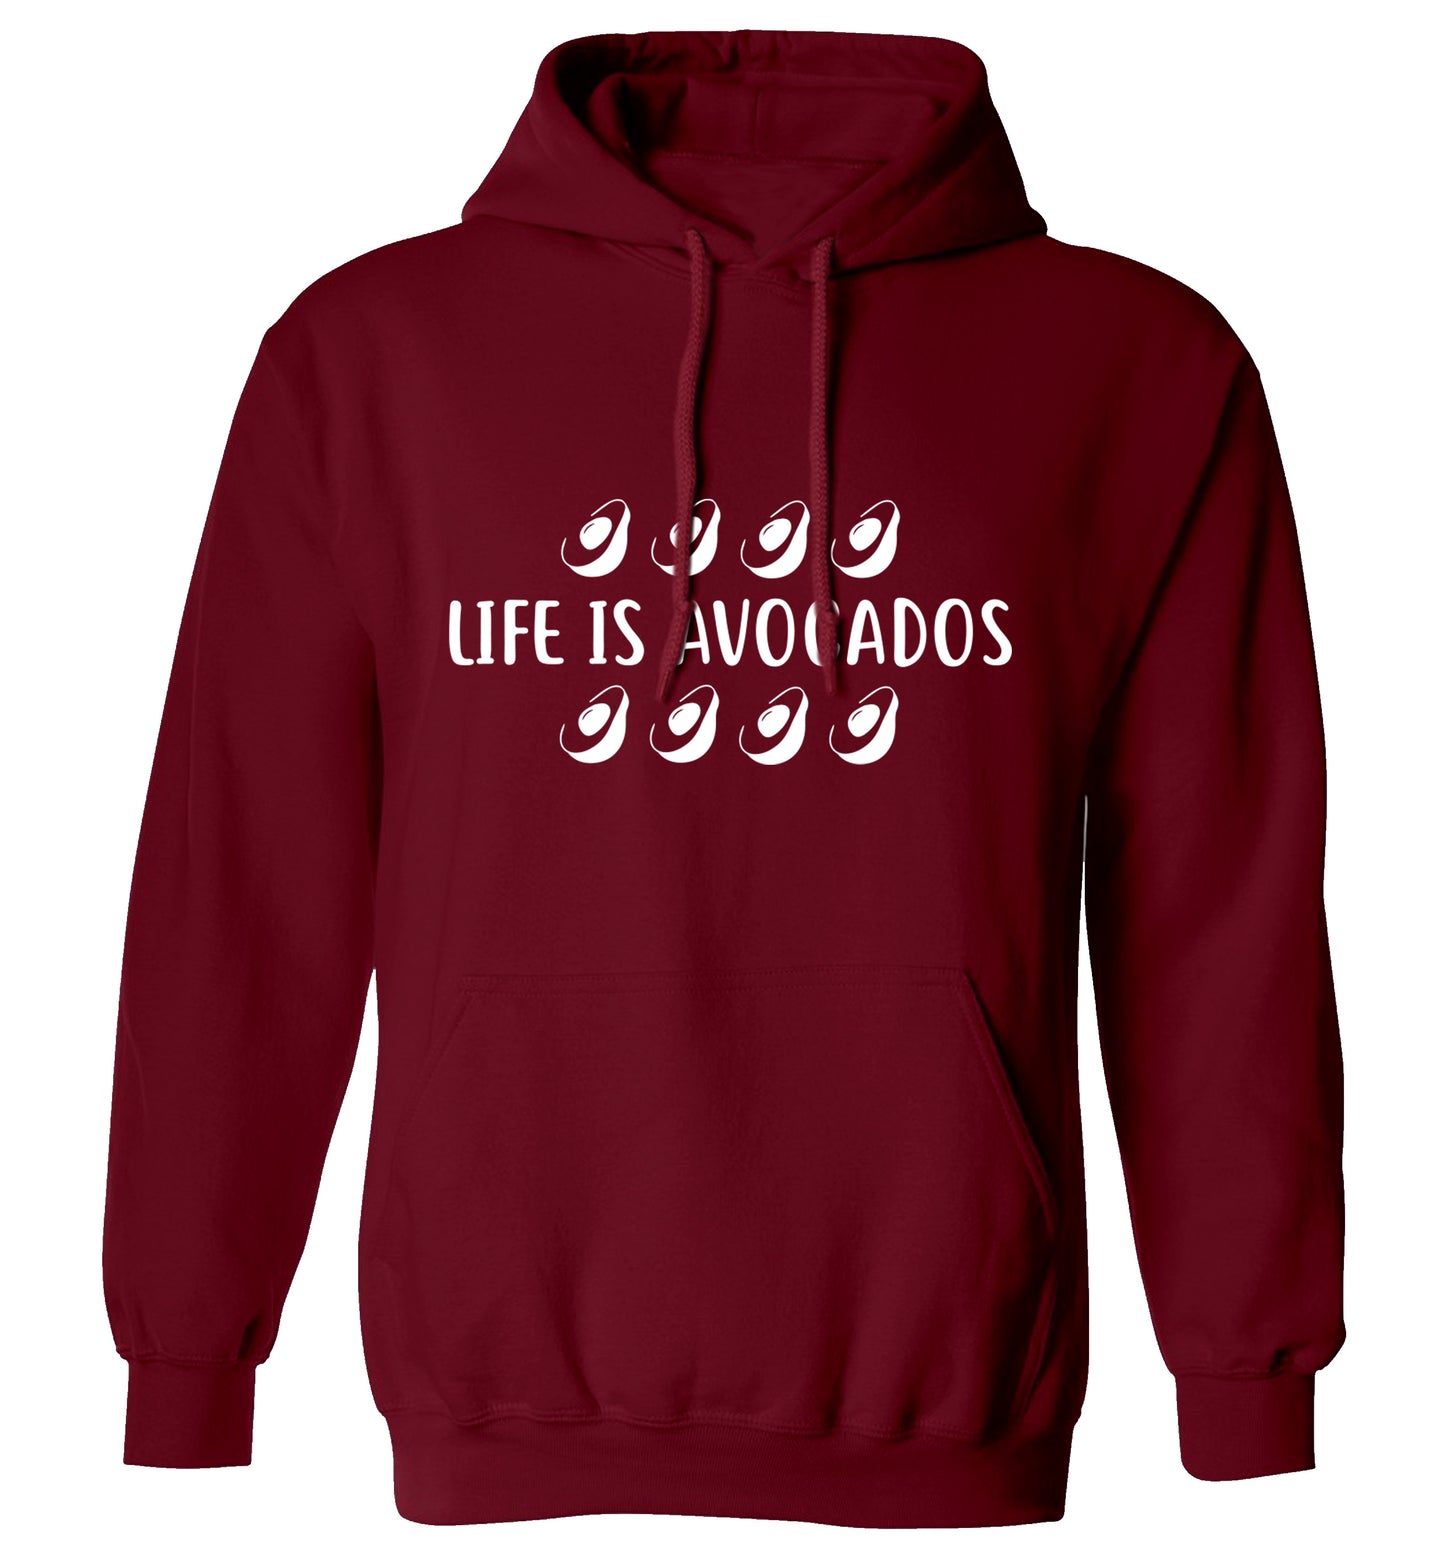 Life is avocados adults unisex maroon hoodie 2XL